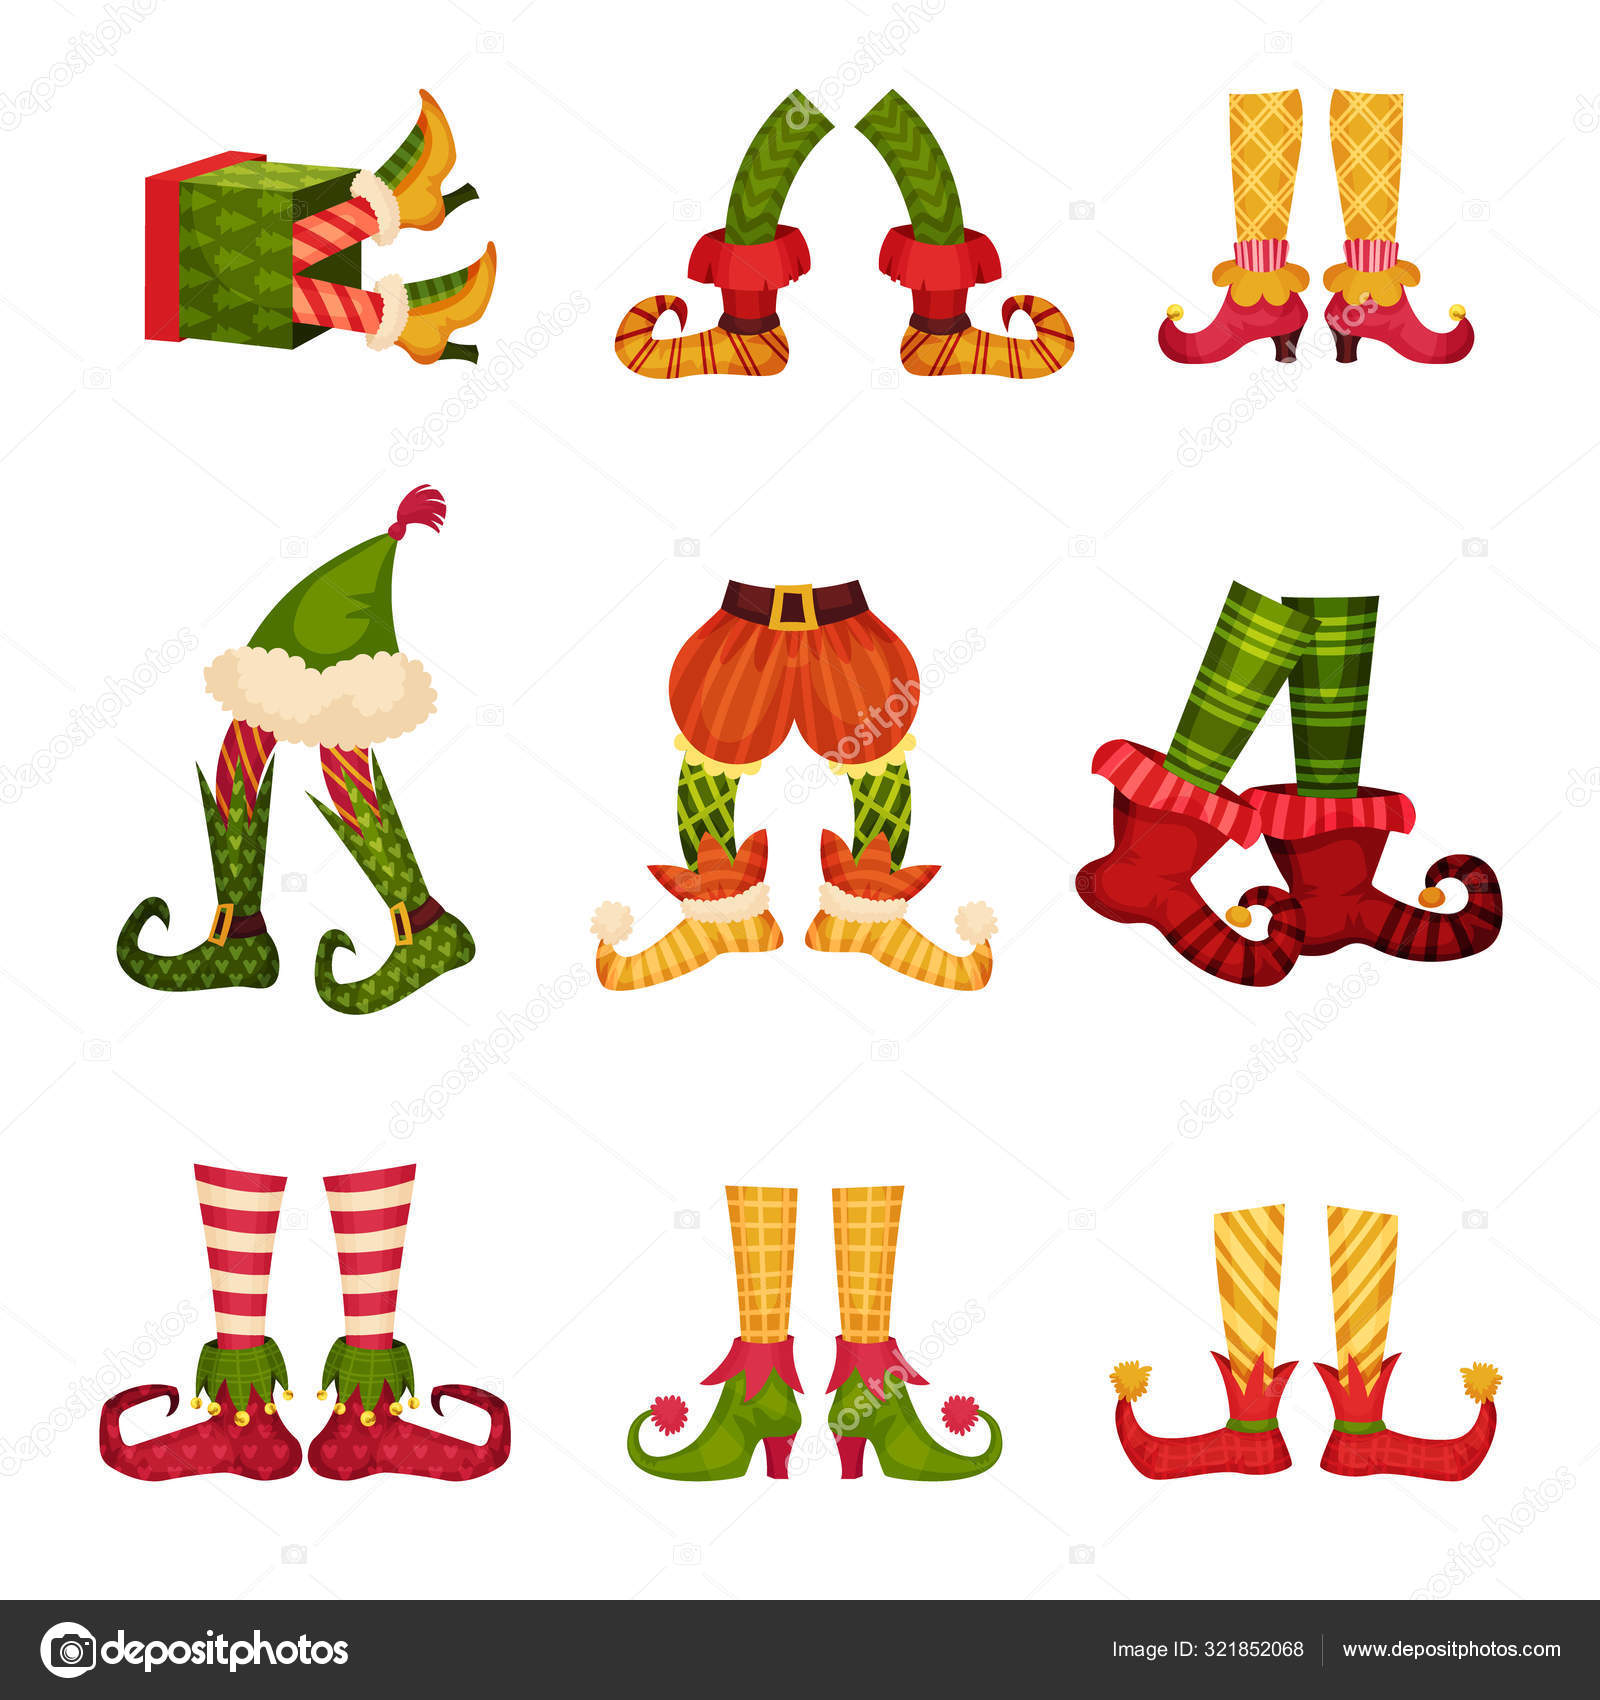 Elf Legs Scarf and Mitts wJingle Bells